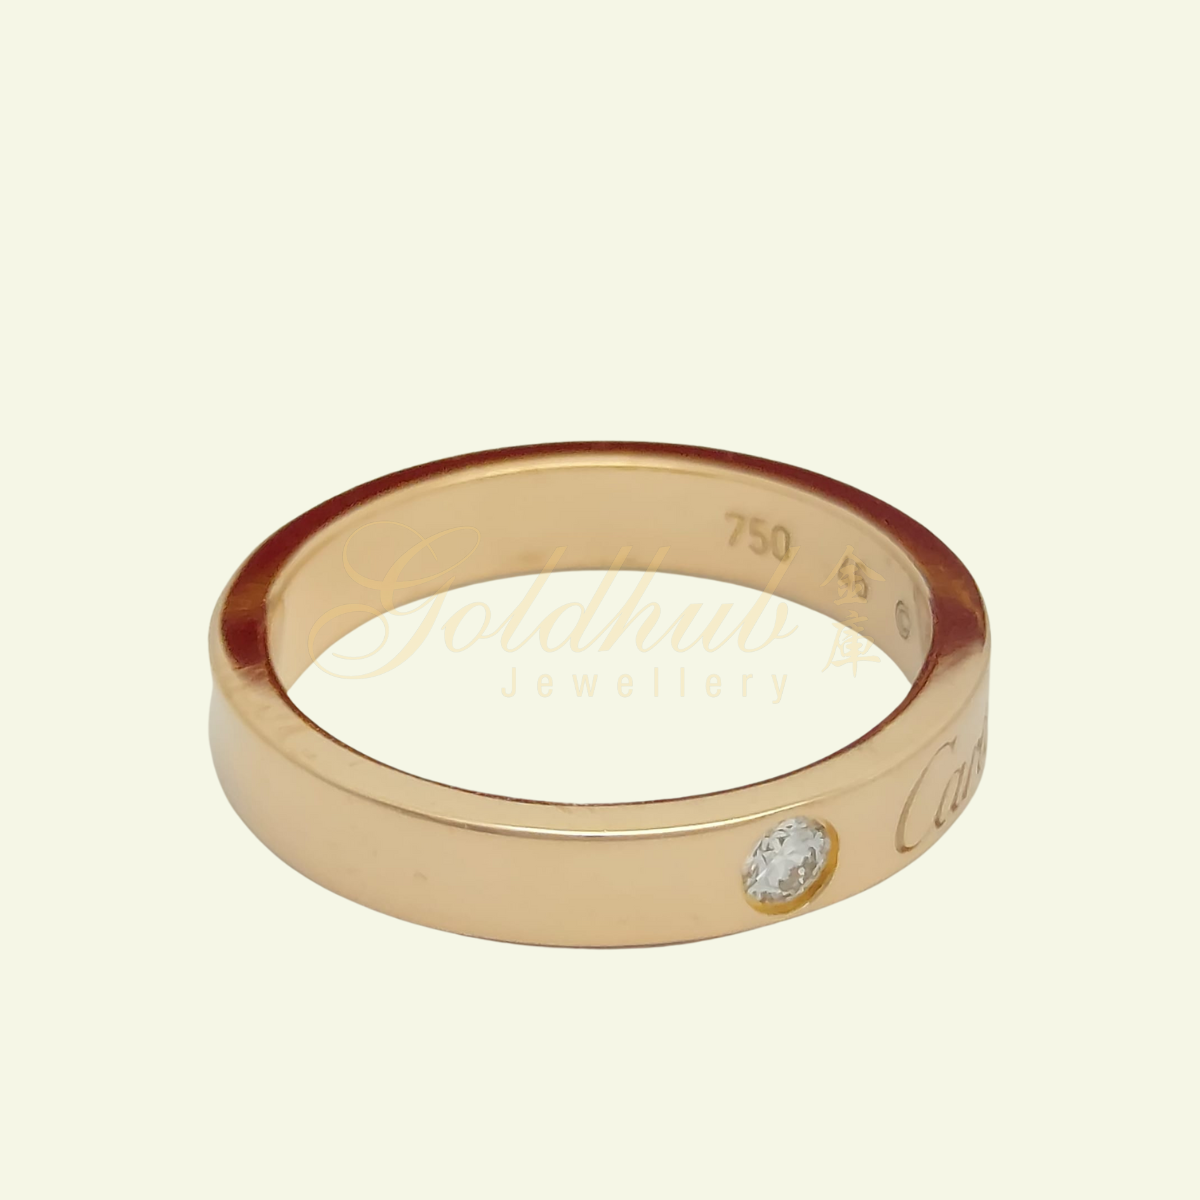 18k Pre-loved Cartier C De Cartier Wedding Diamond Ring in Rose Gold